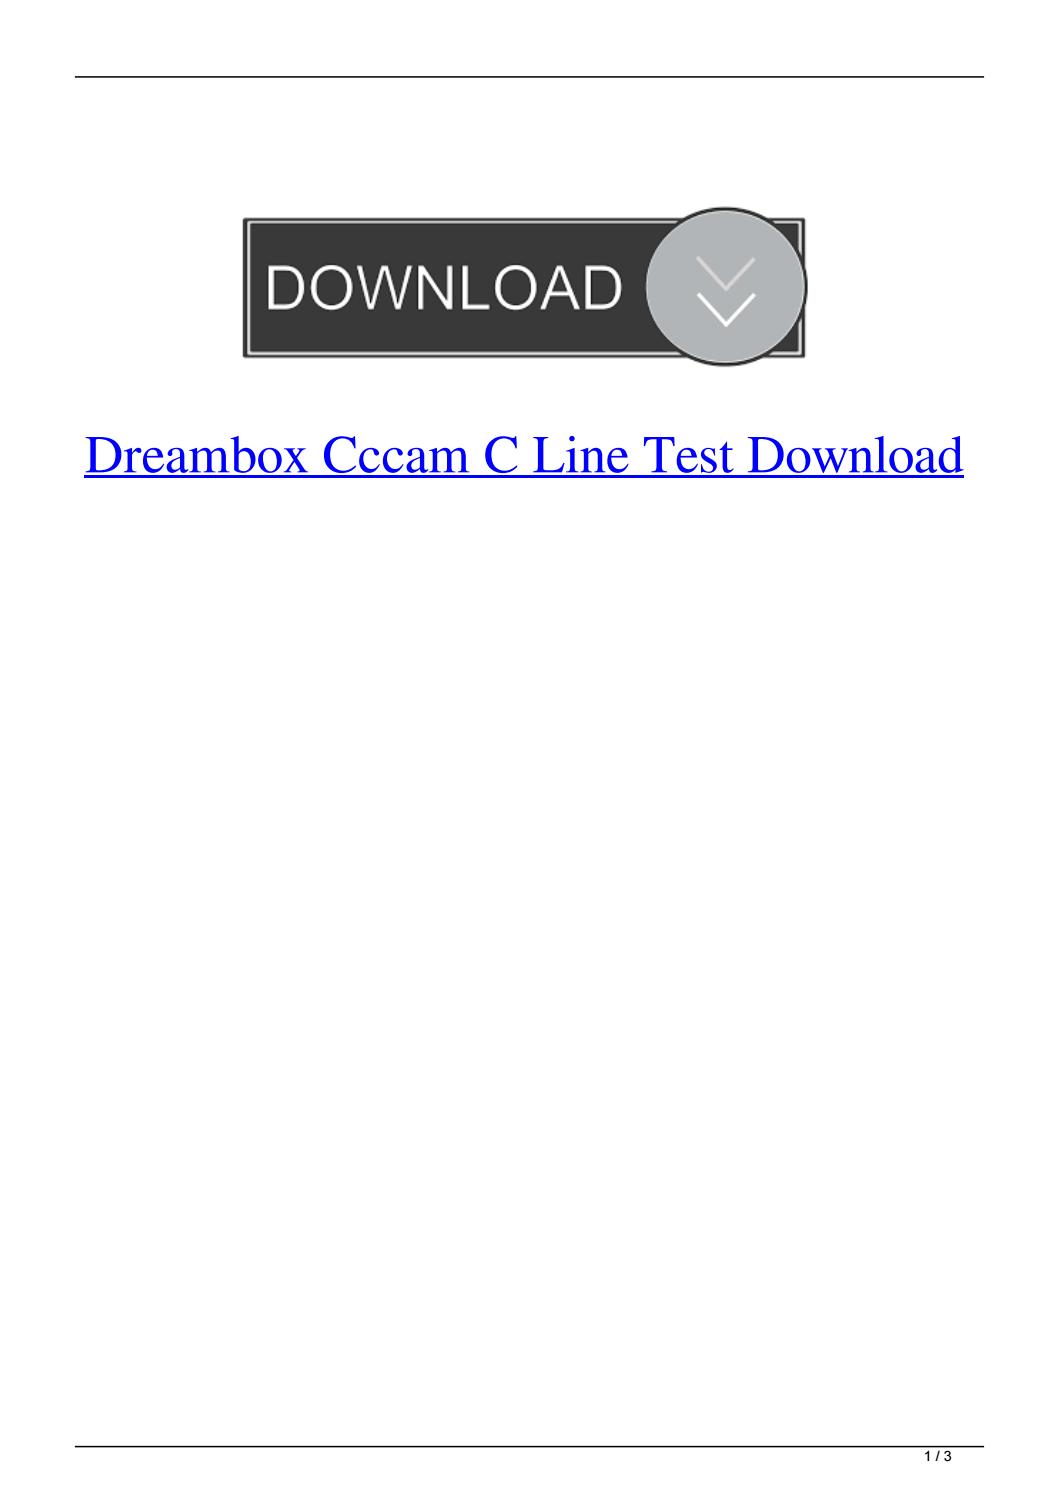 Cccam config ipk download